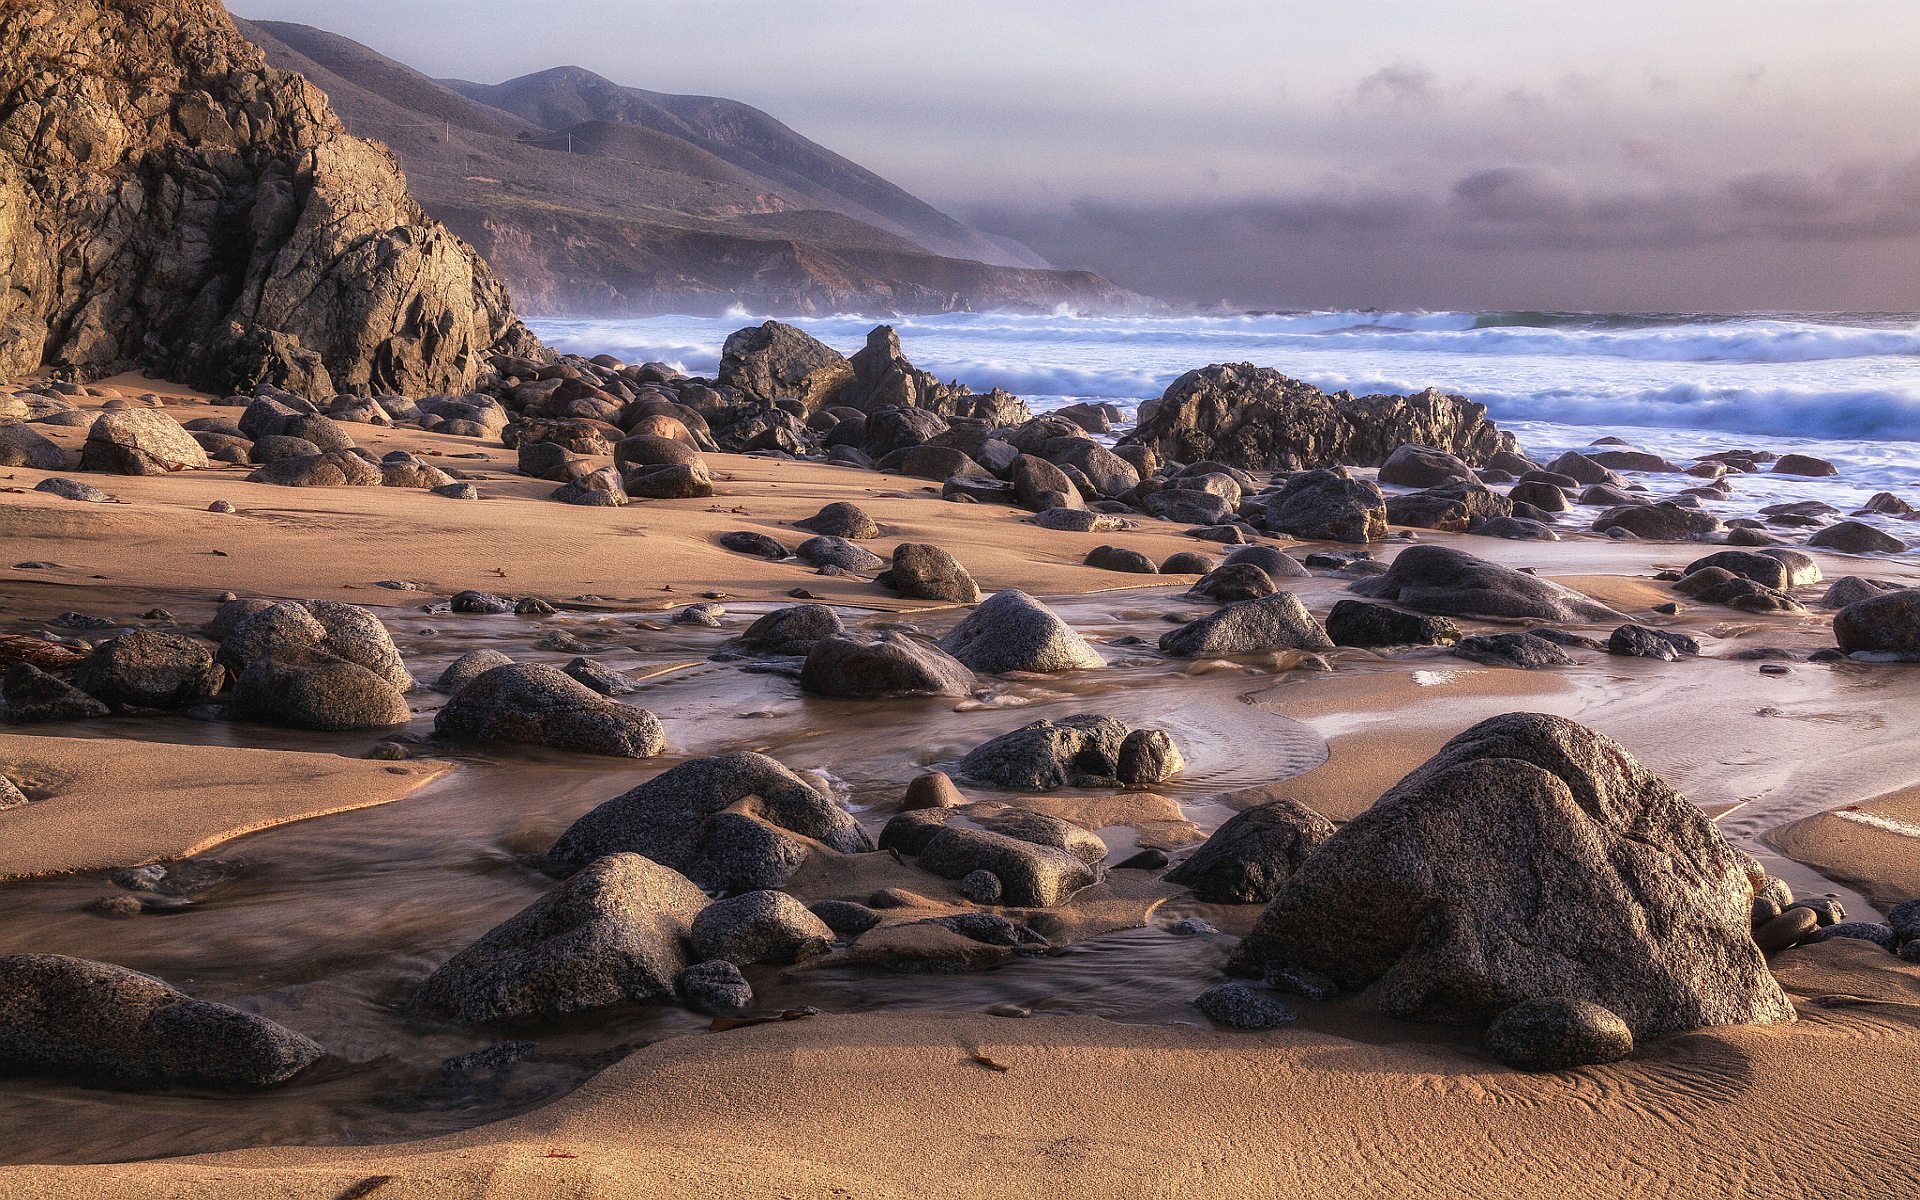 Beach shore rocks